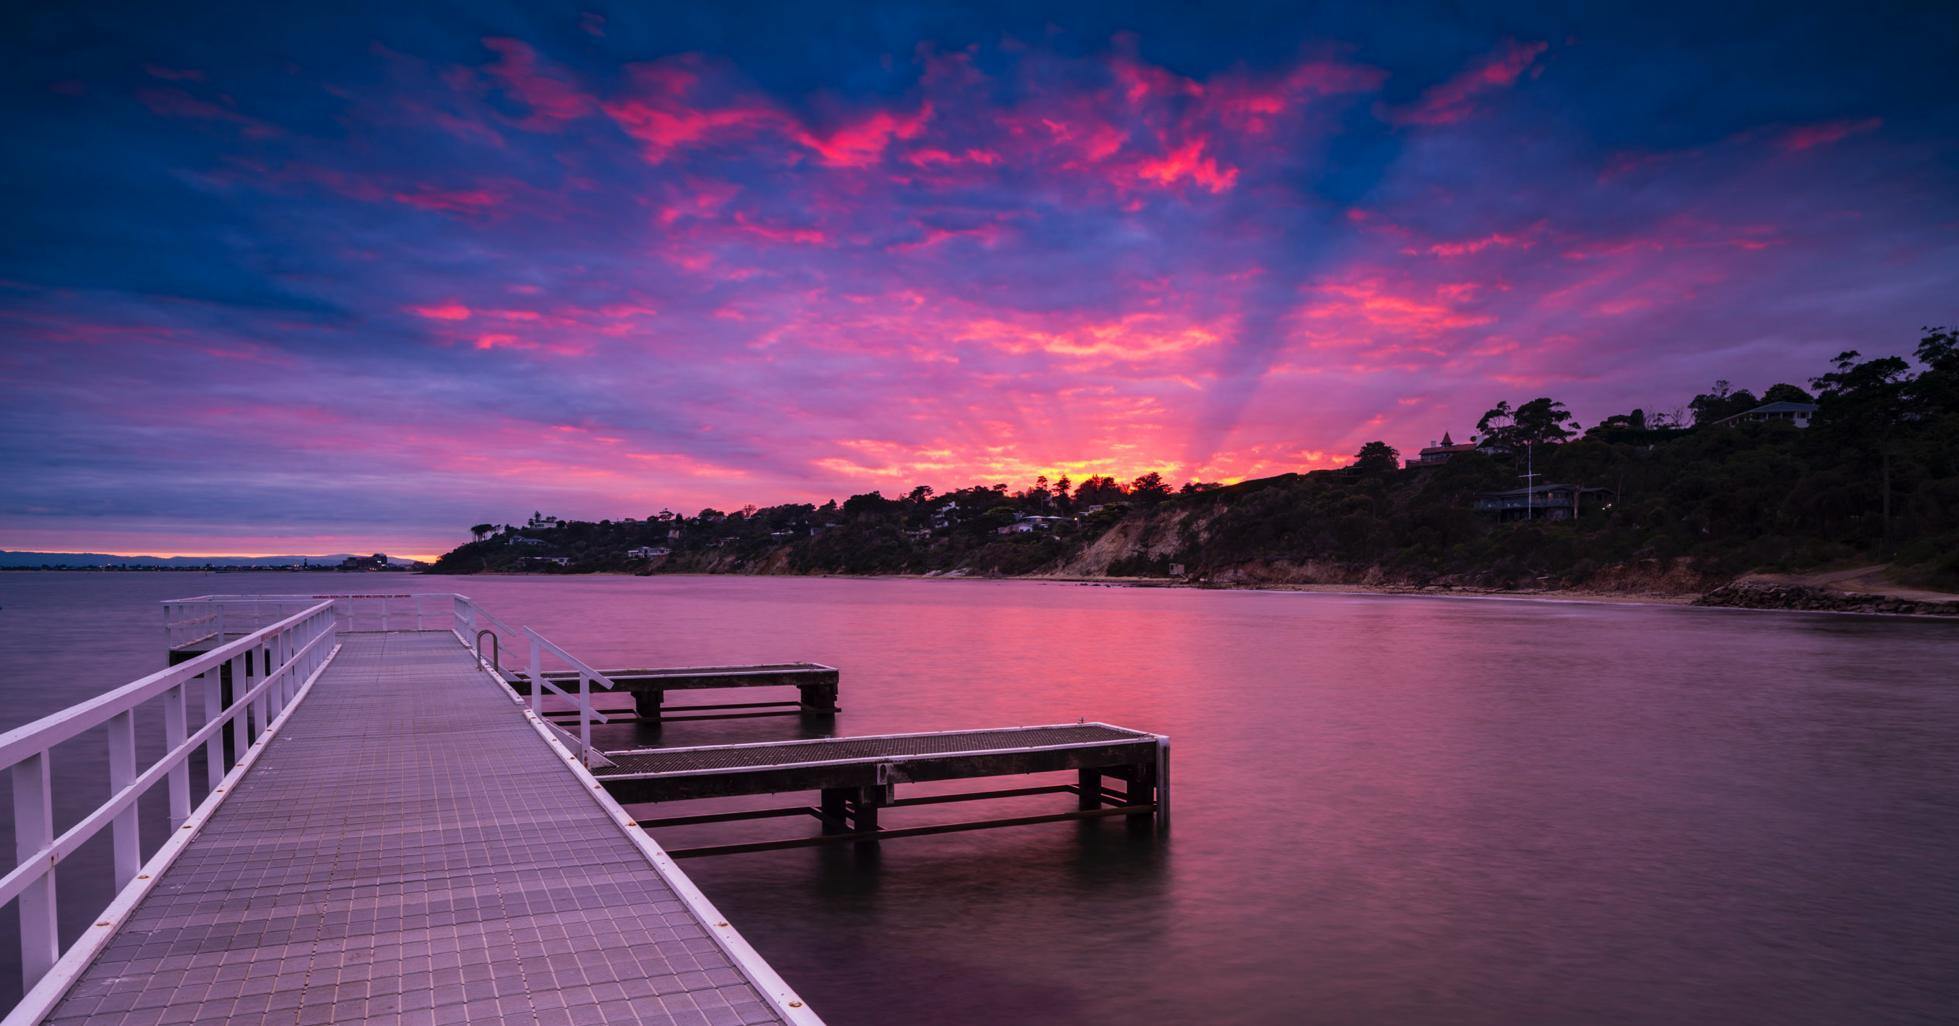 A wooden bridge over water a lake, and a pinkish weather effect, Mt Eliza Sunrise - Mornington Peninsula VIC